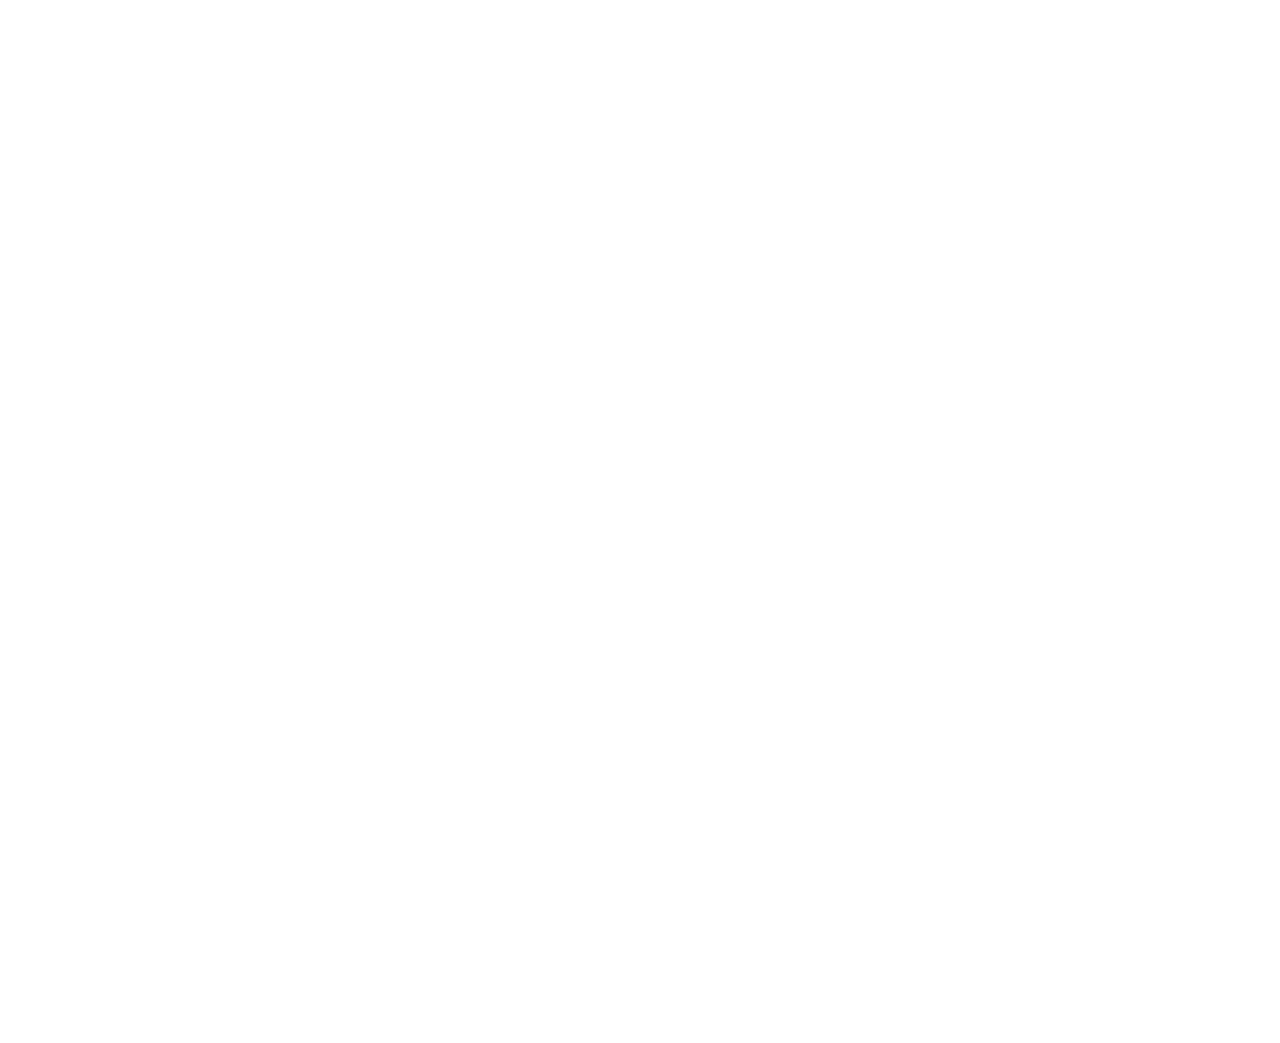 the Sugar Stone Collective's logo